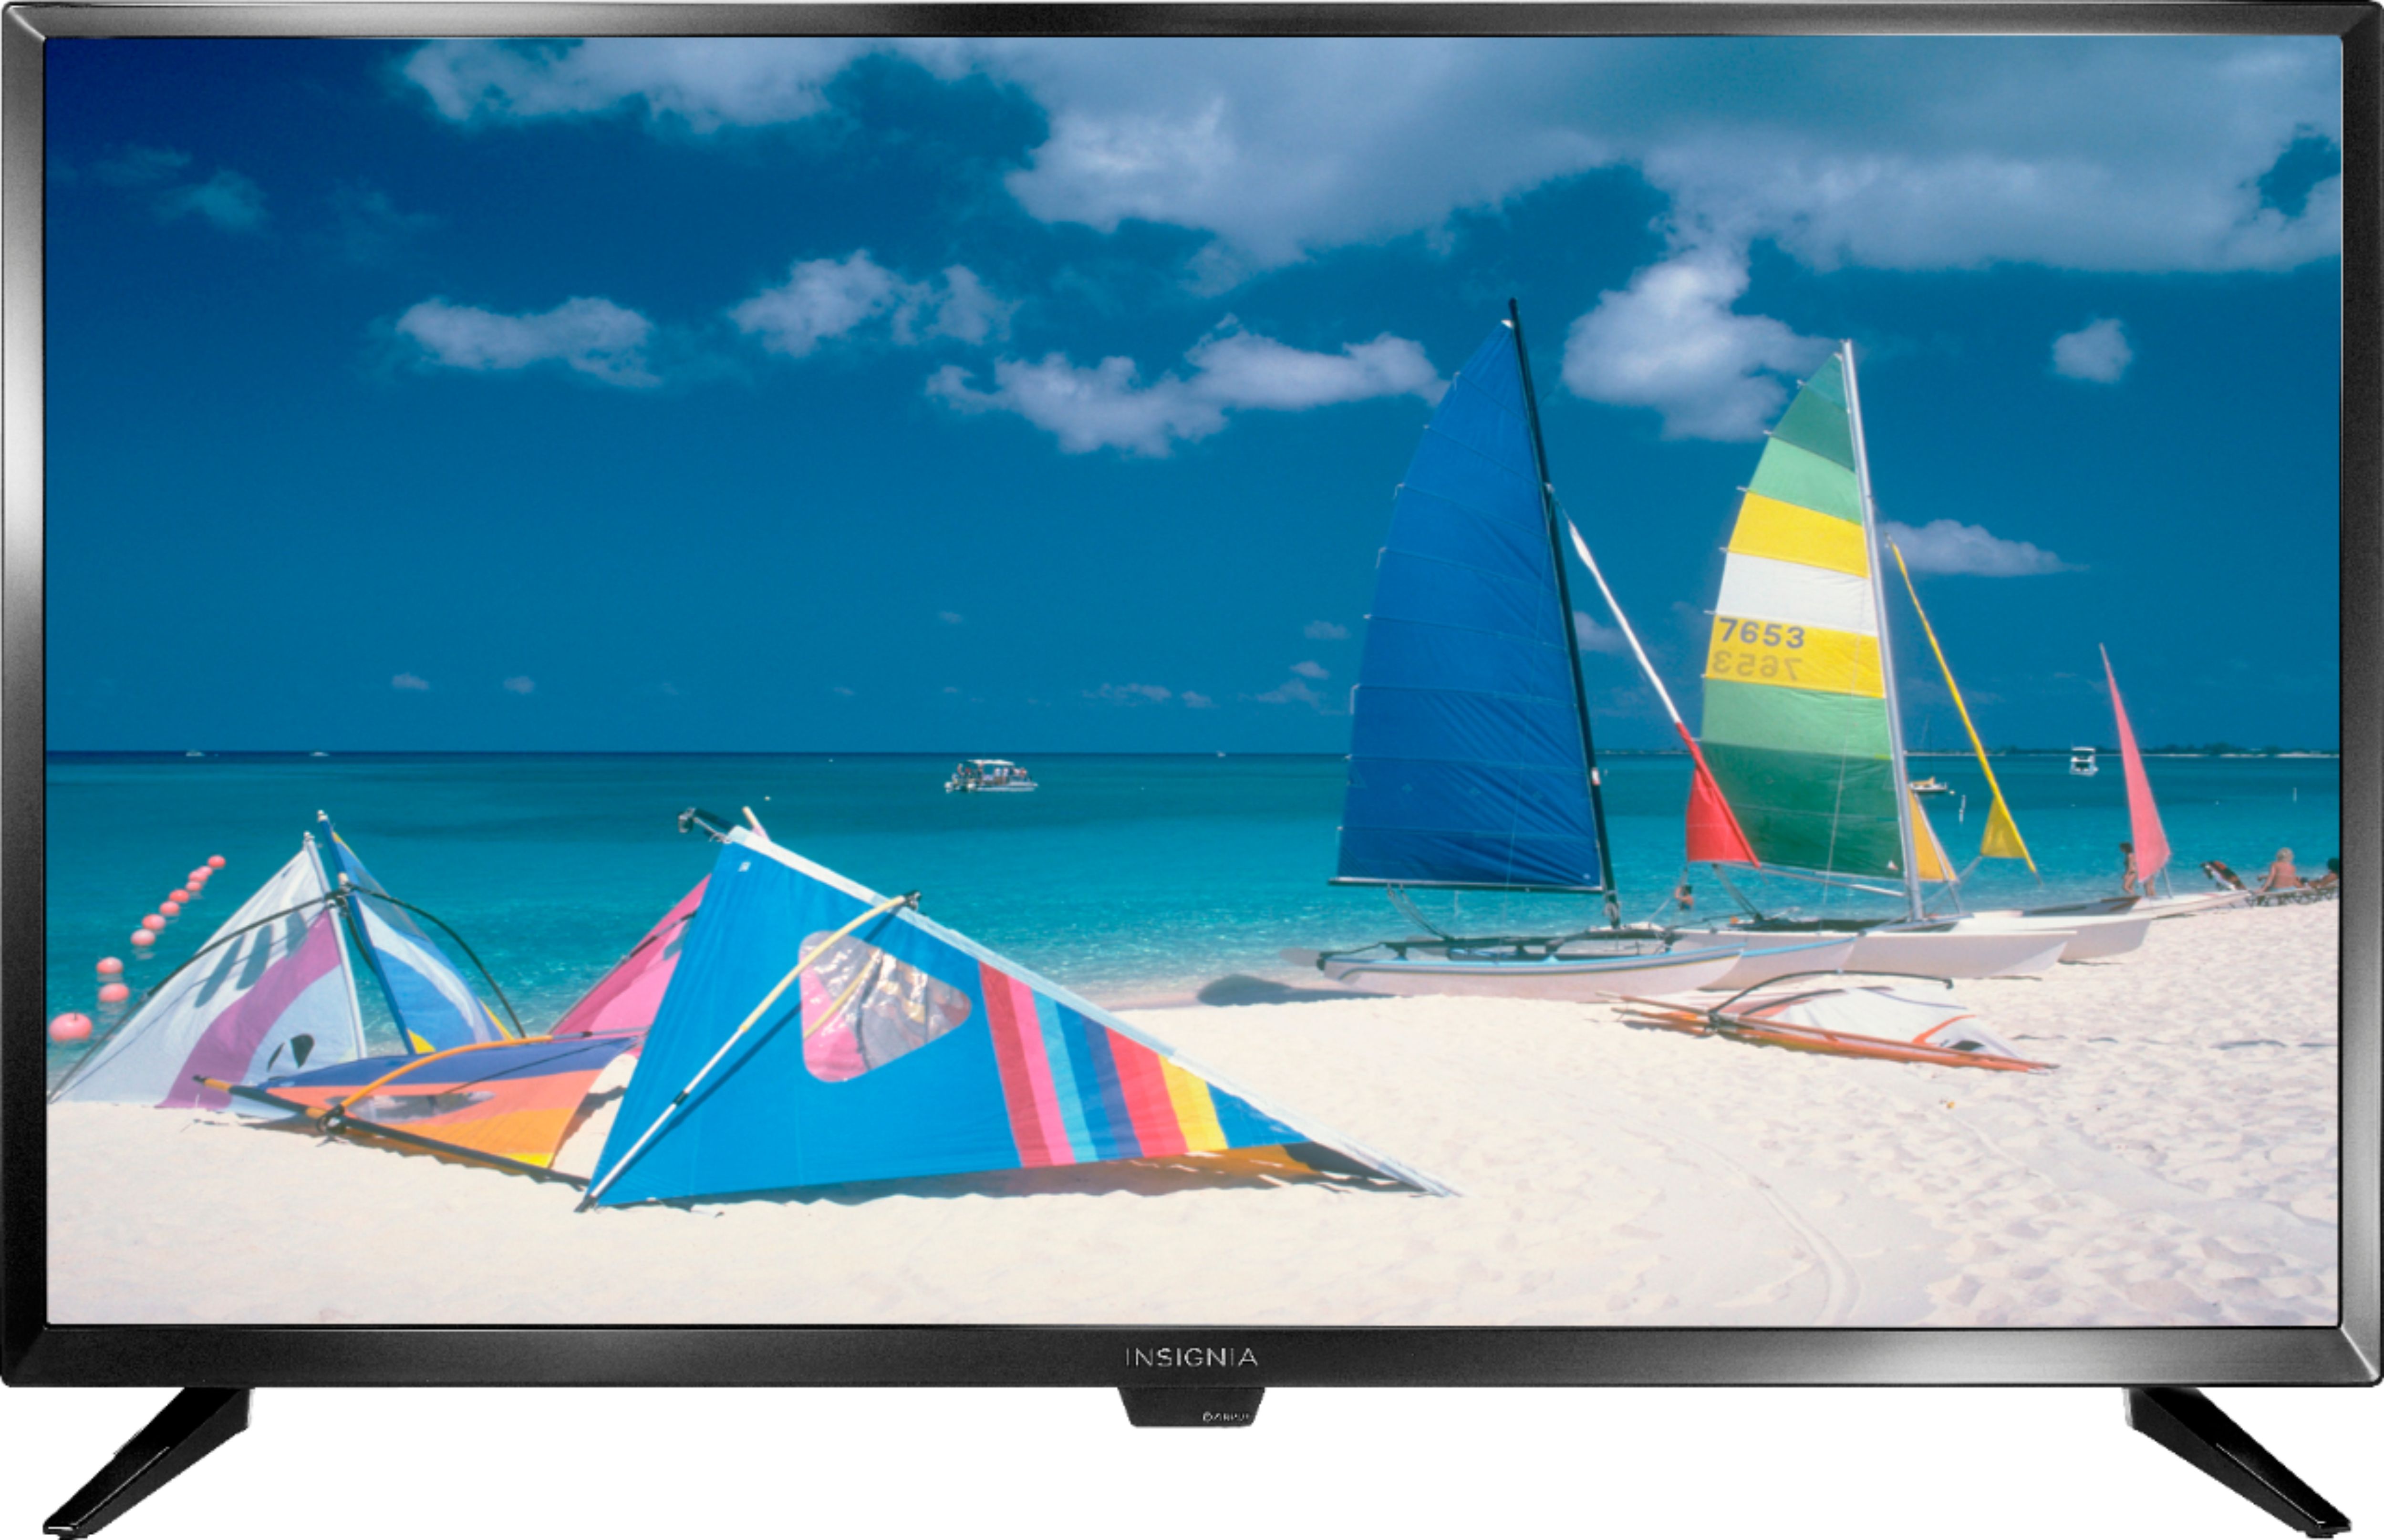 Insignia 32" Class - LED - 720p - HDTV - Brand New In Box 600603214585